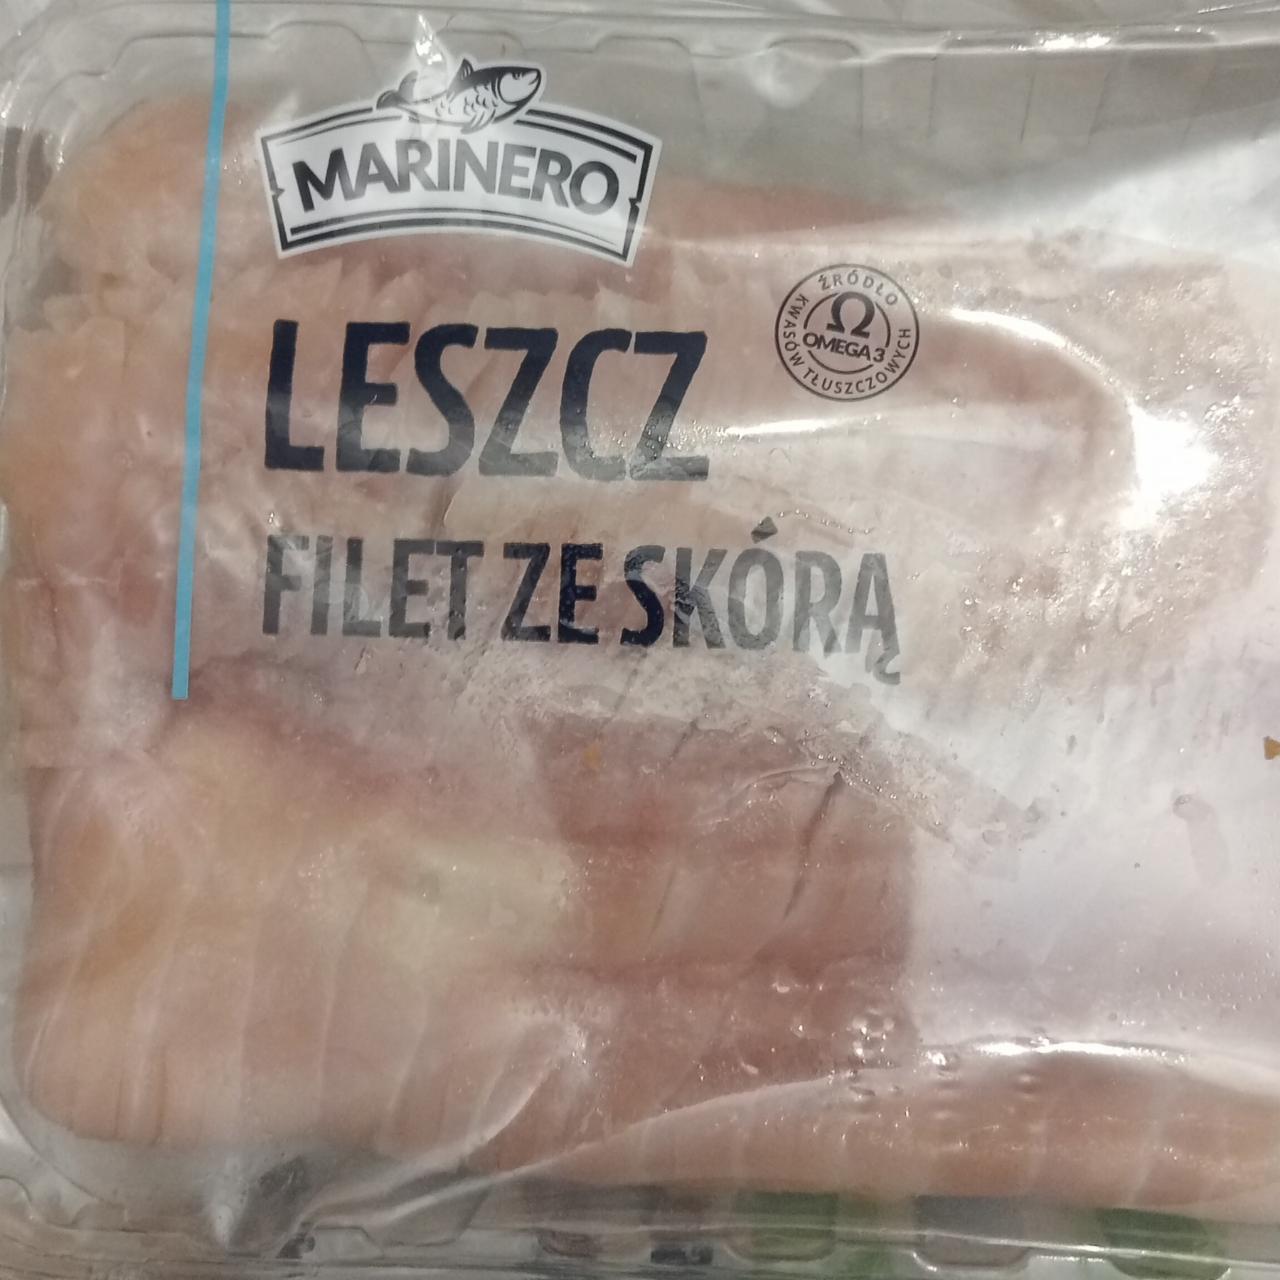 Фото - Leszcz Filet ze skórą ŻAN Marinero